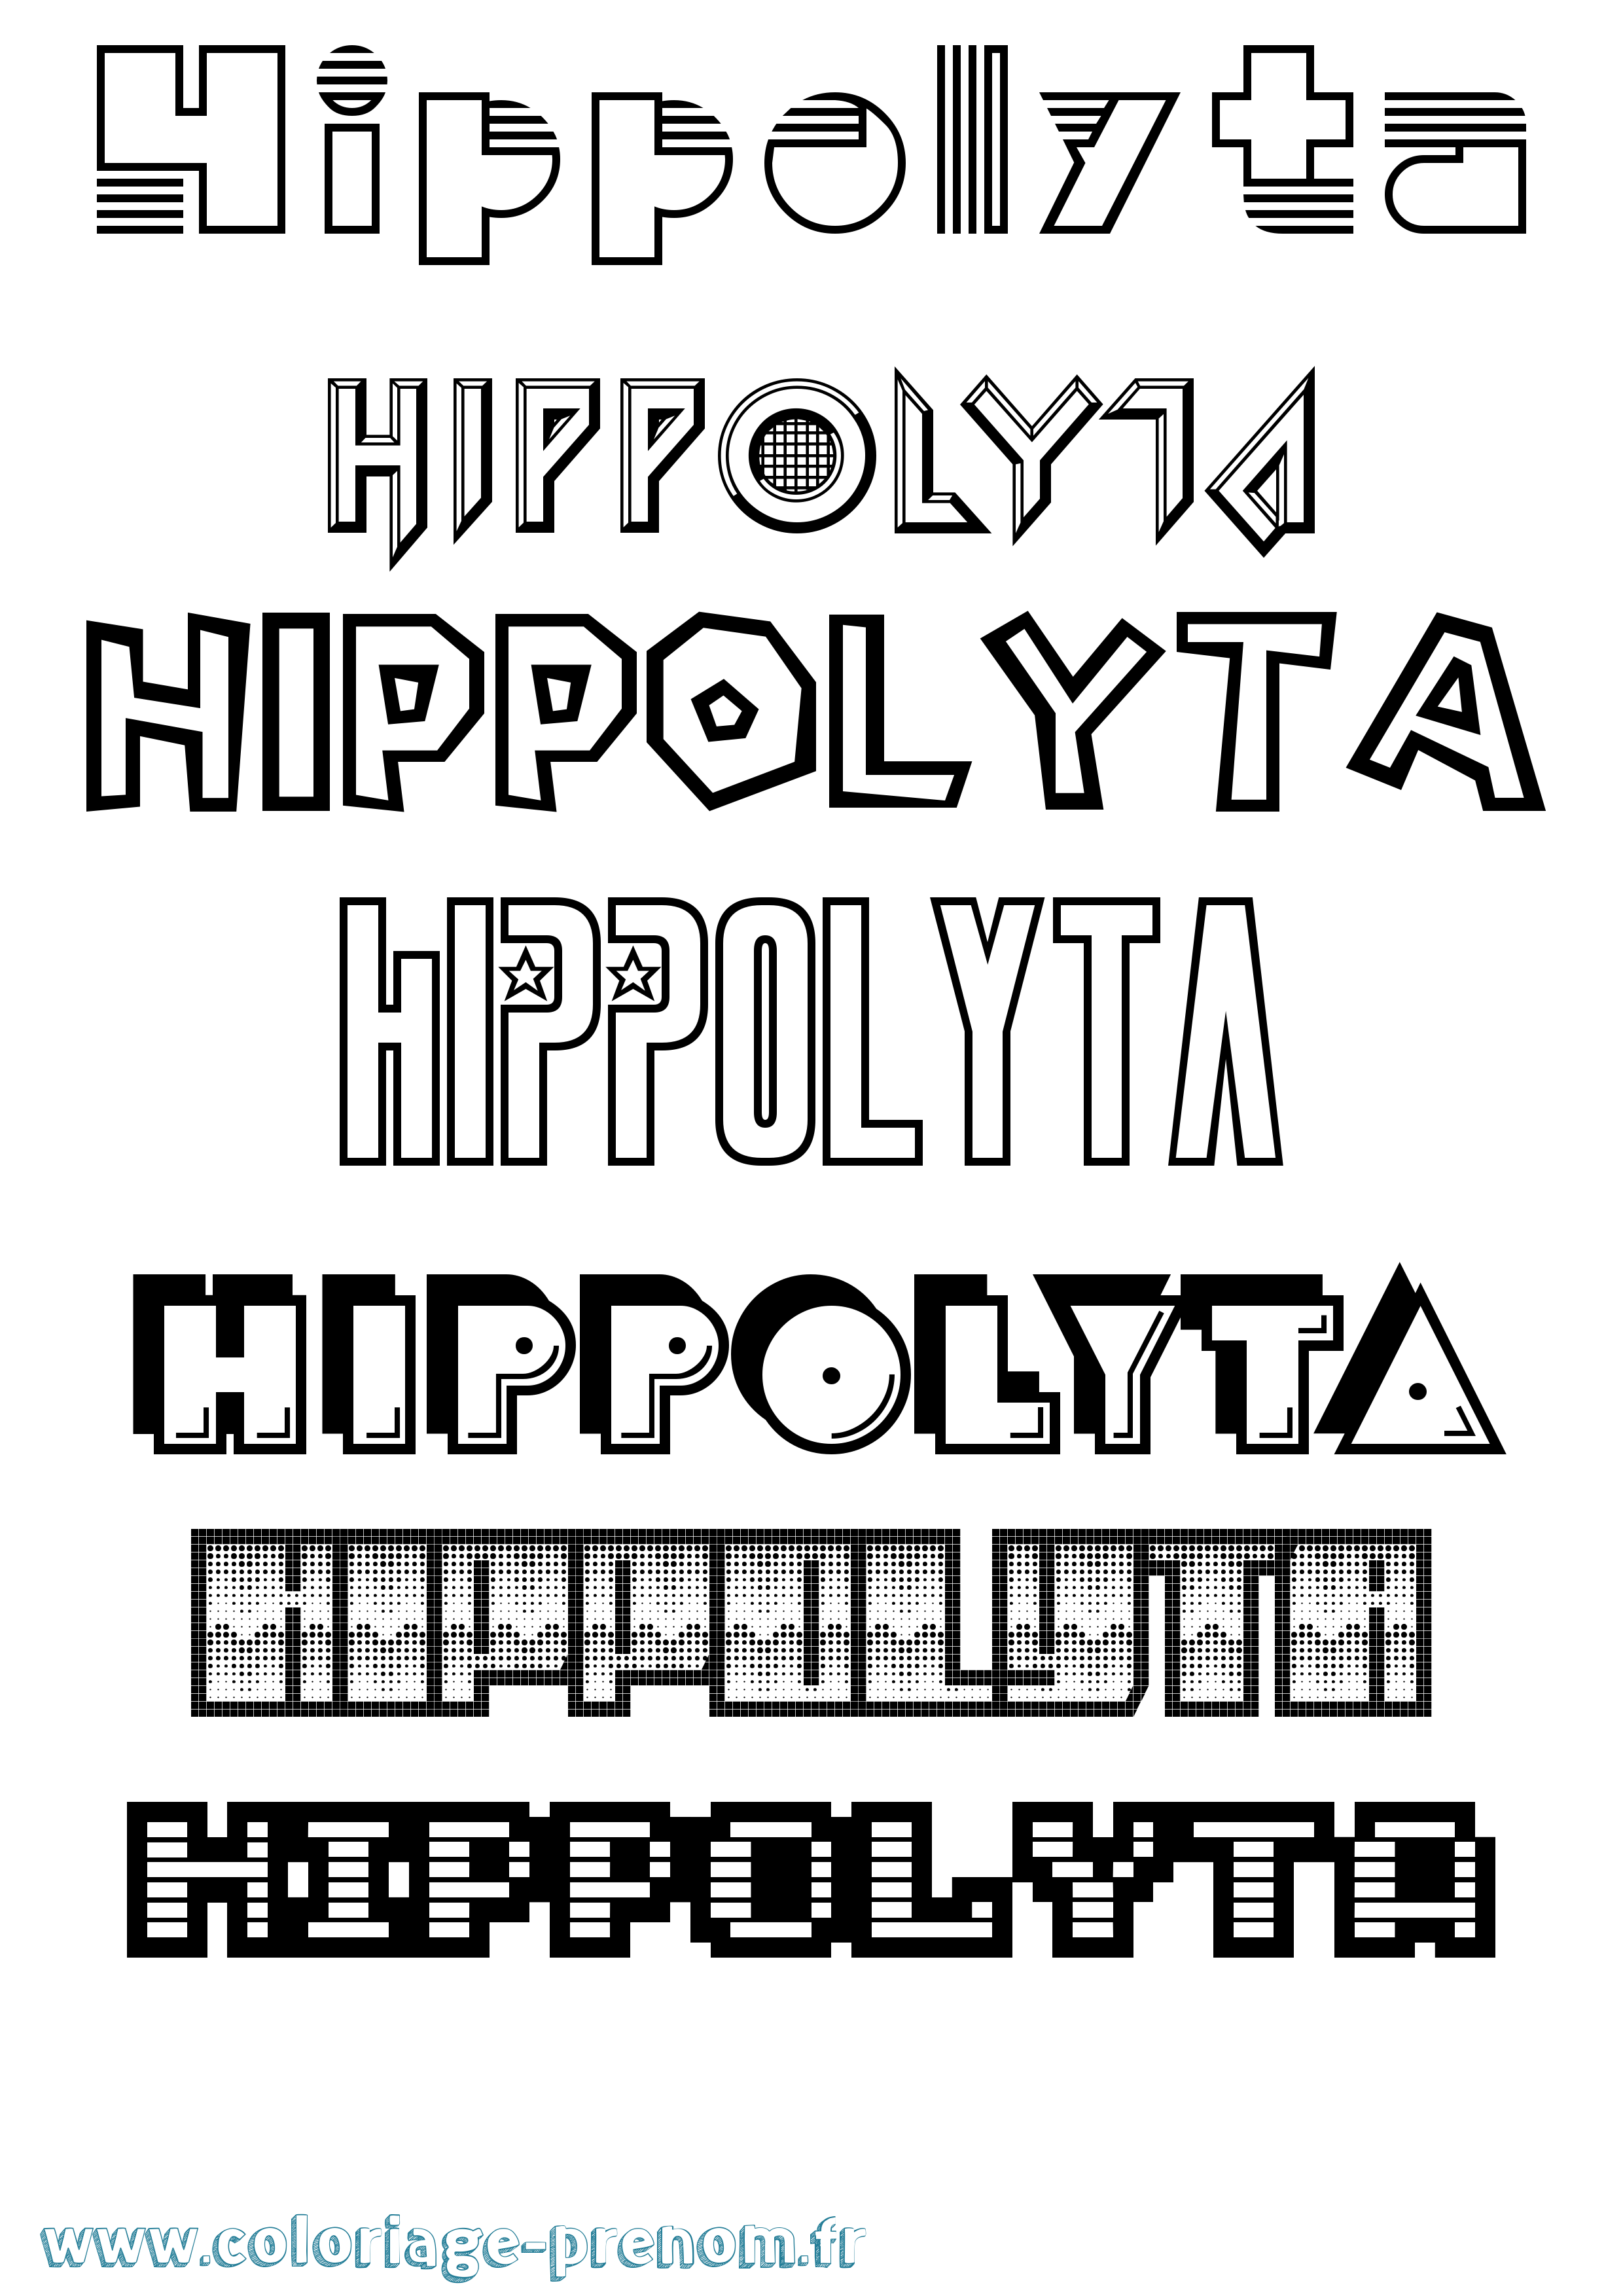 Coloriage prénom Hippolyta Jeux Vidéos